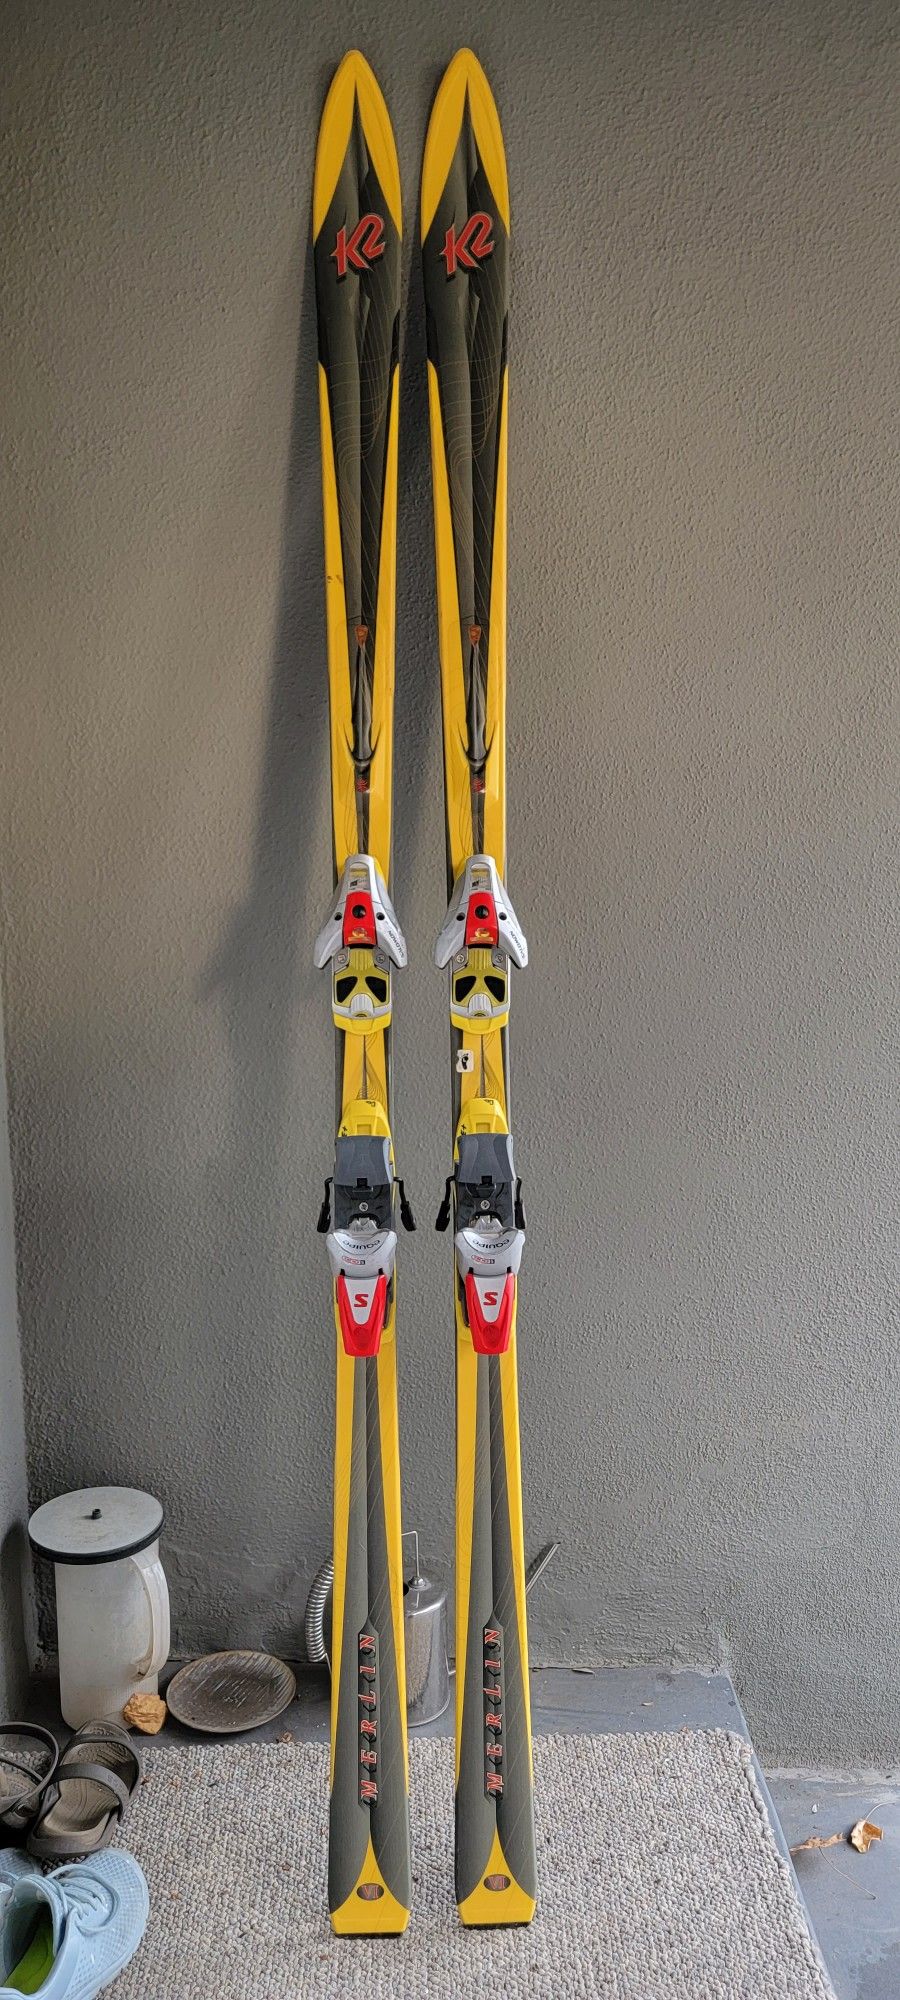 K2 Merlin VI Snow Skis w/ Salomon Equipe Bindings 183cm